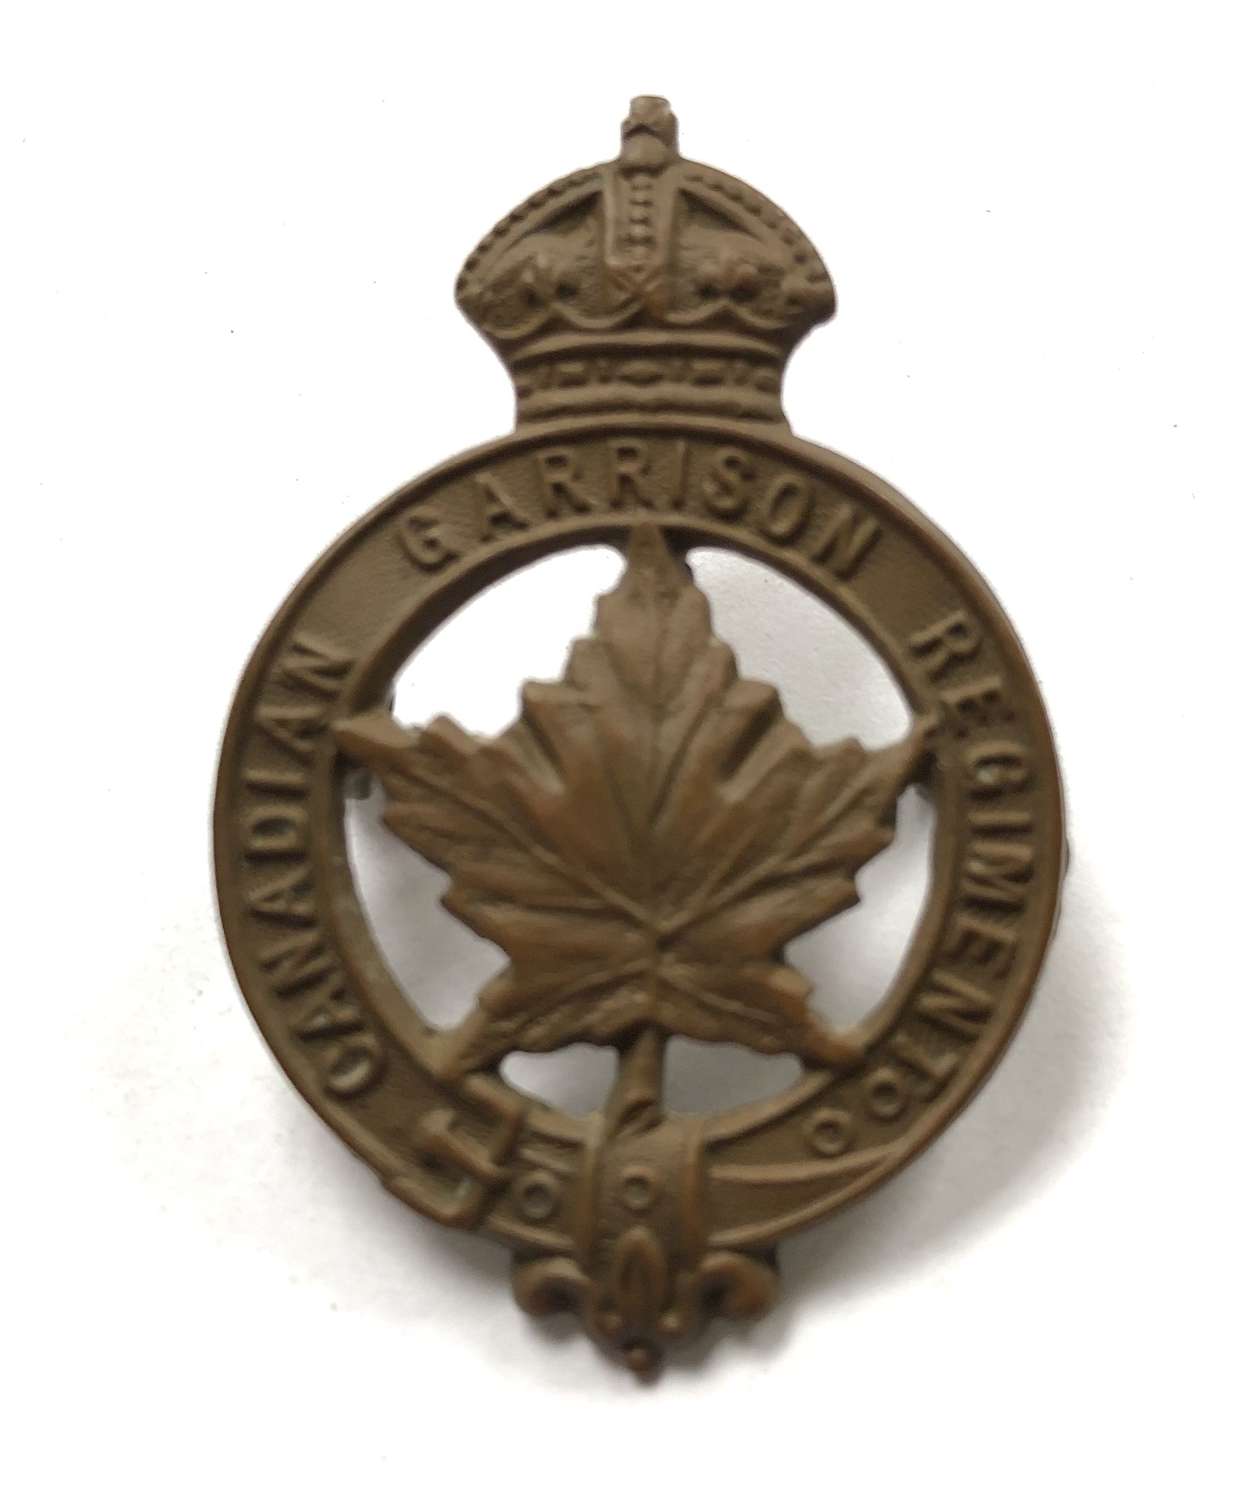 WW1 Canadian Garrison Regiment cap badge by Caron